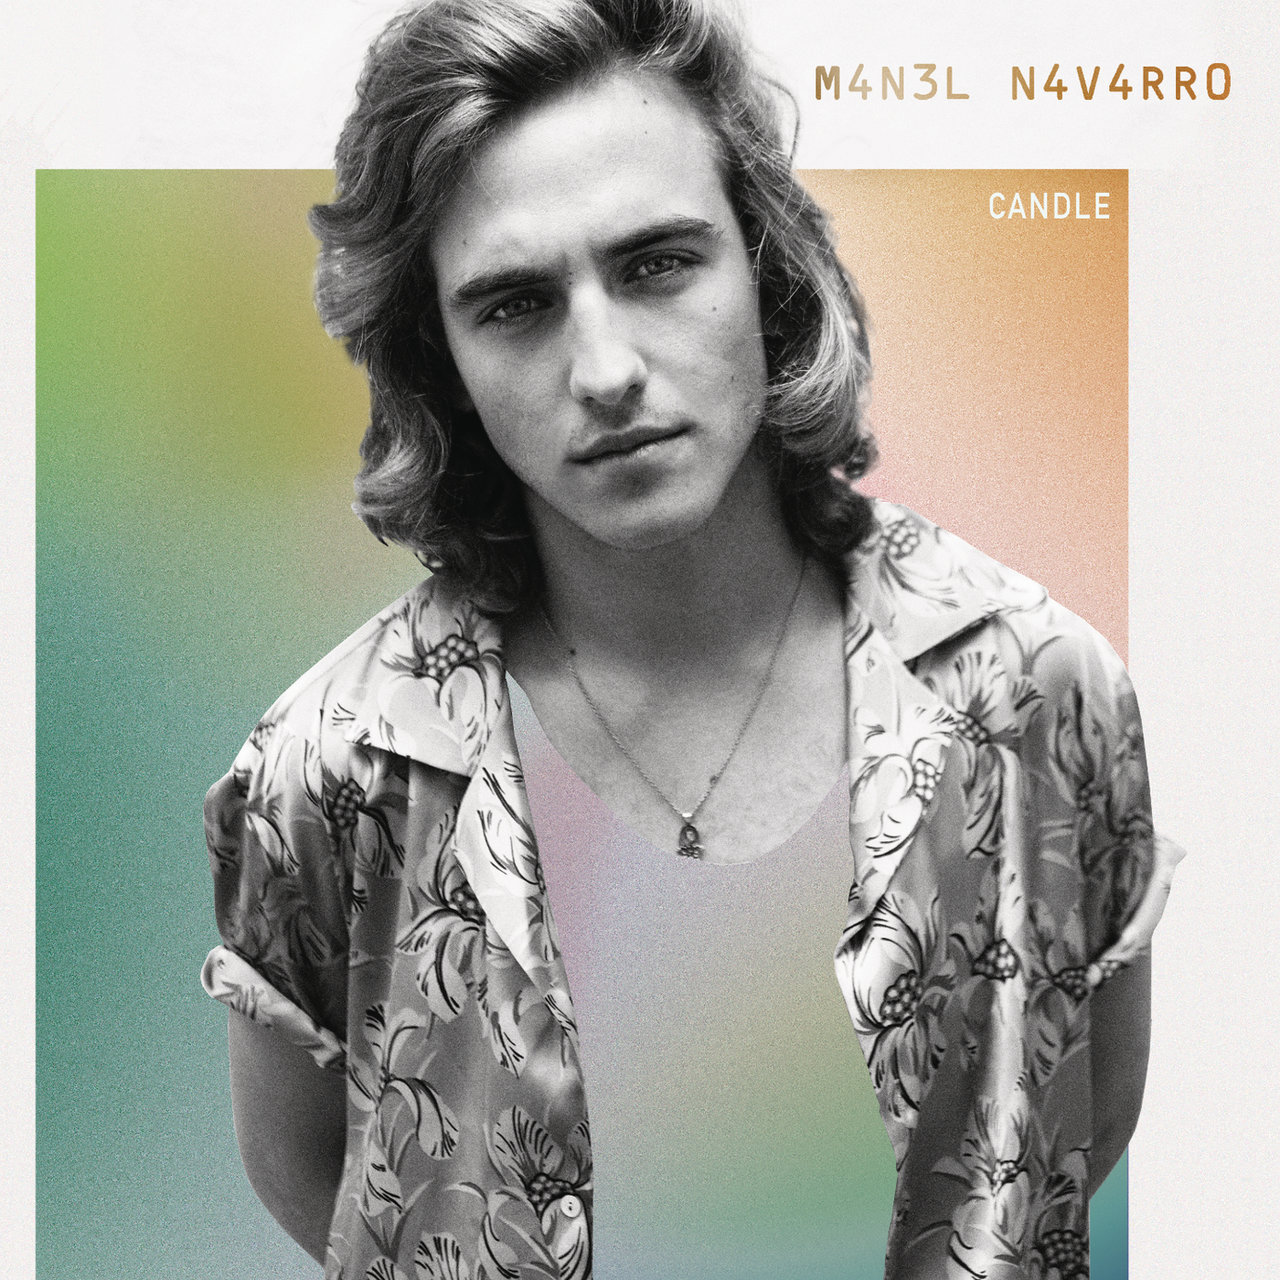 Manel Navarro Candle cover artwork